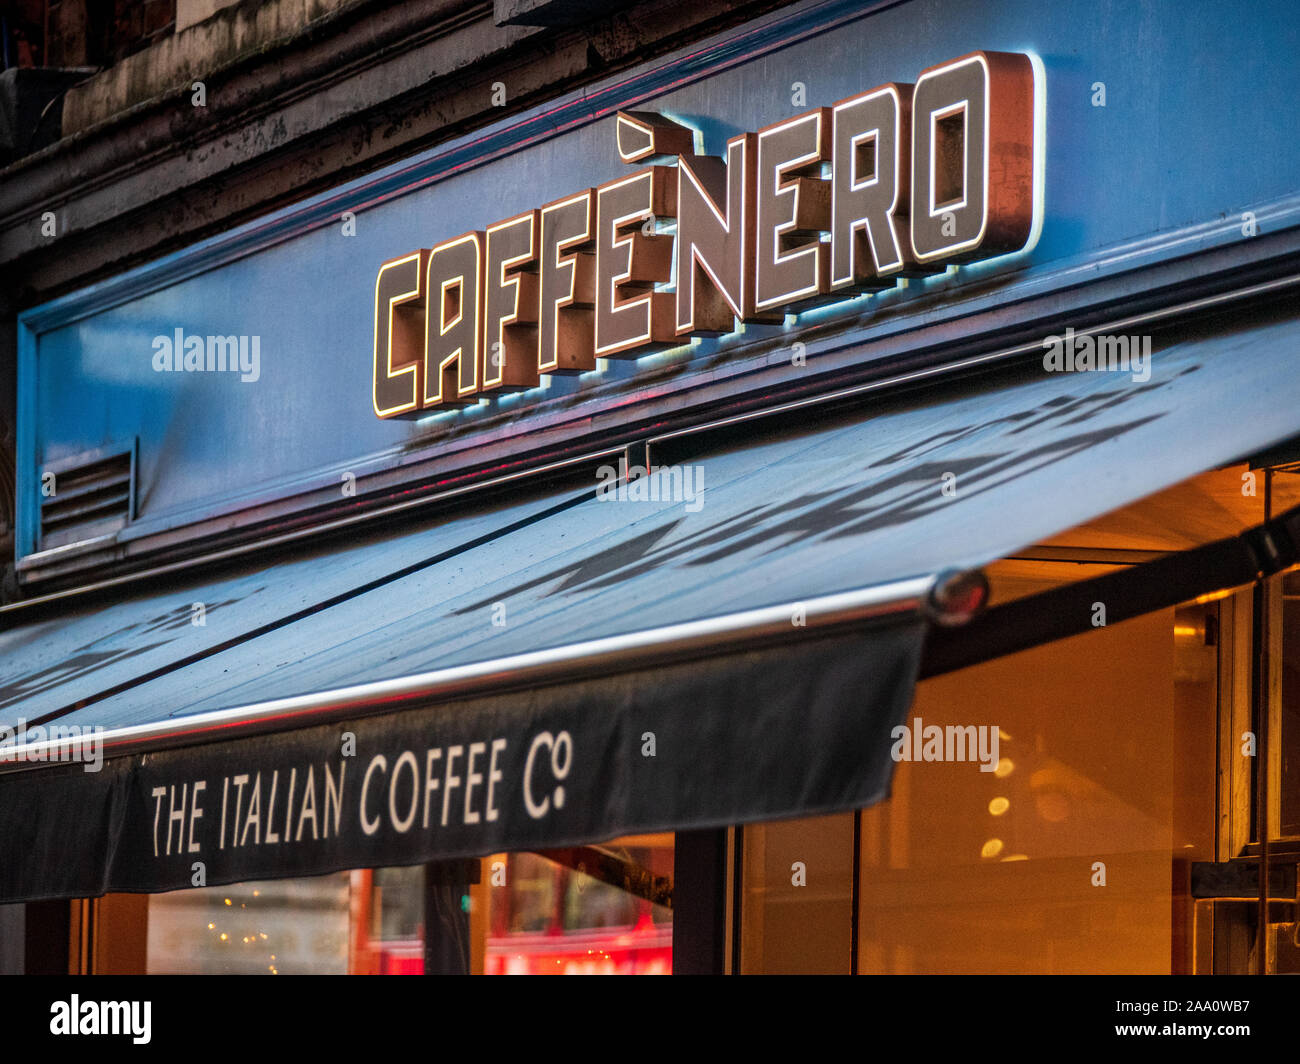 Caffe Nero - Cafe Nero - Caffè Nero-Signage außerhalb eines Caffe Nero Coffee Shop in London Stockfoto